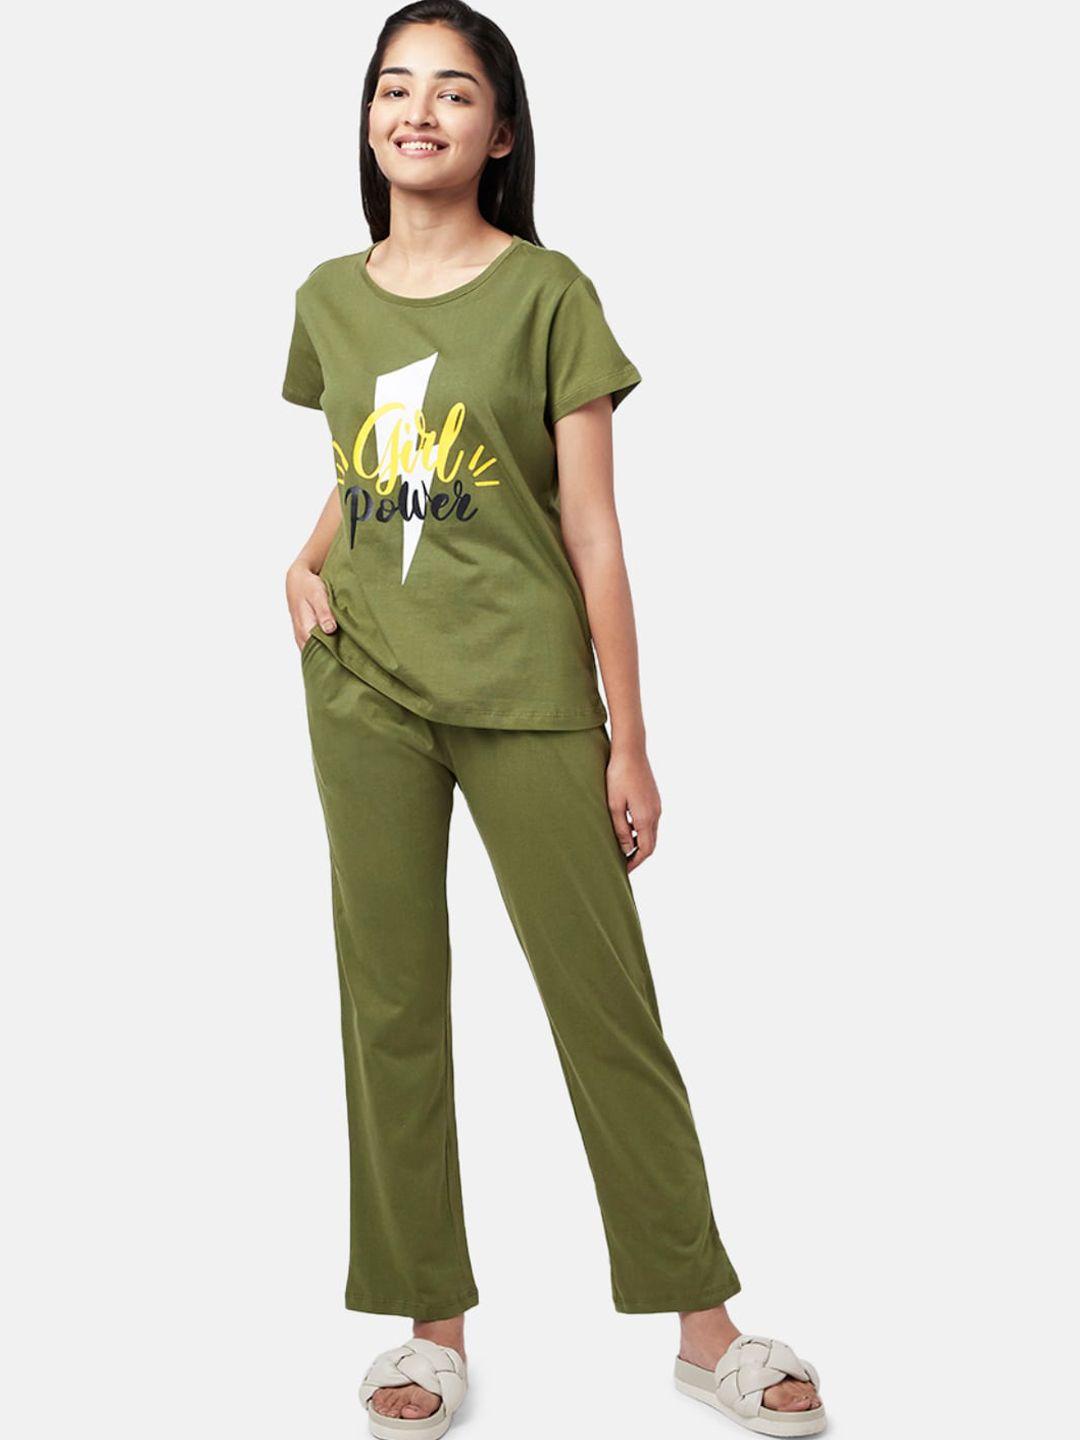 yu by pantaloons women green & yellow printed night suit